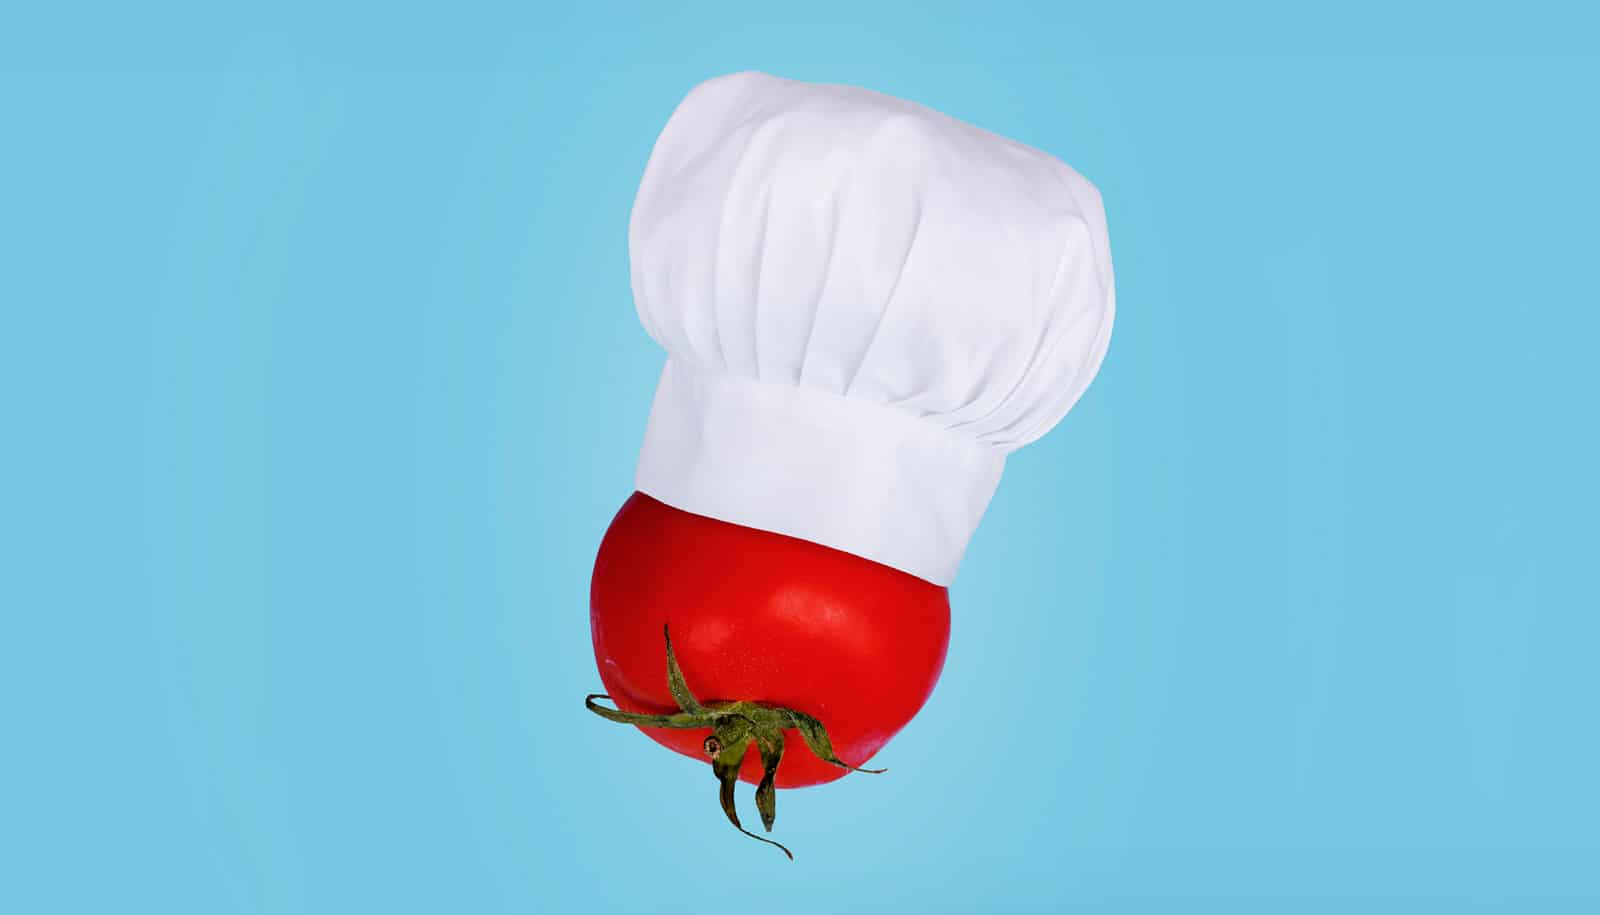 chef's hat on tomato